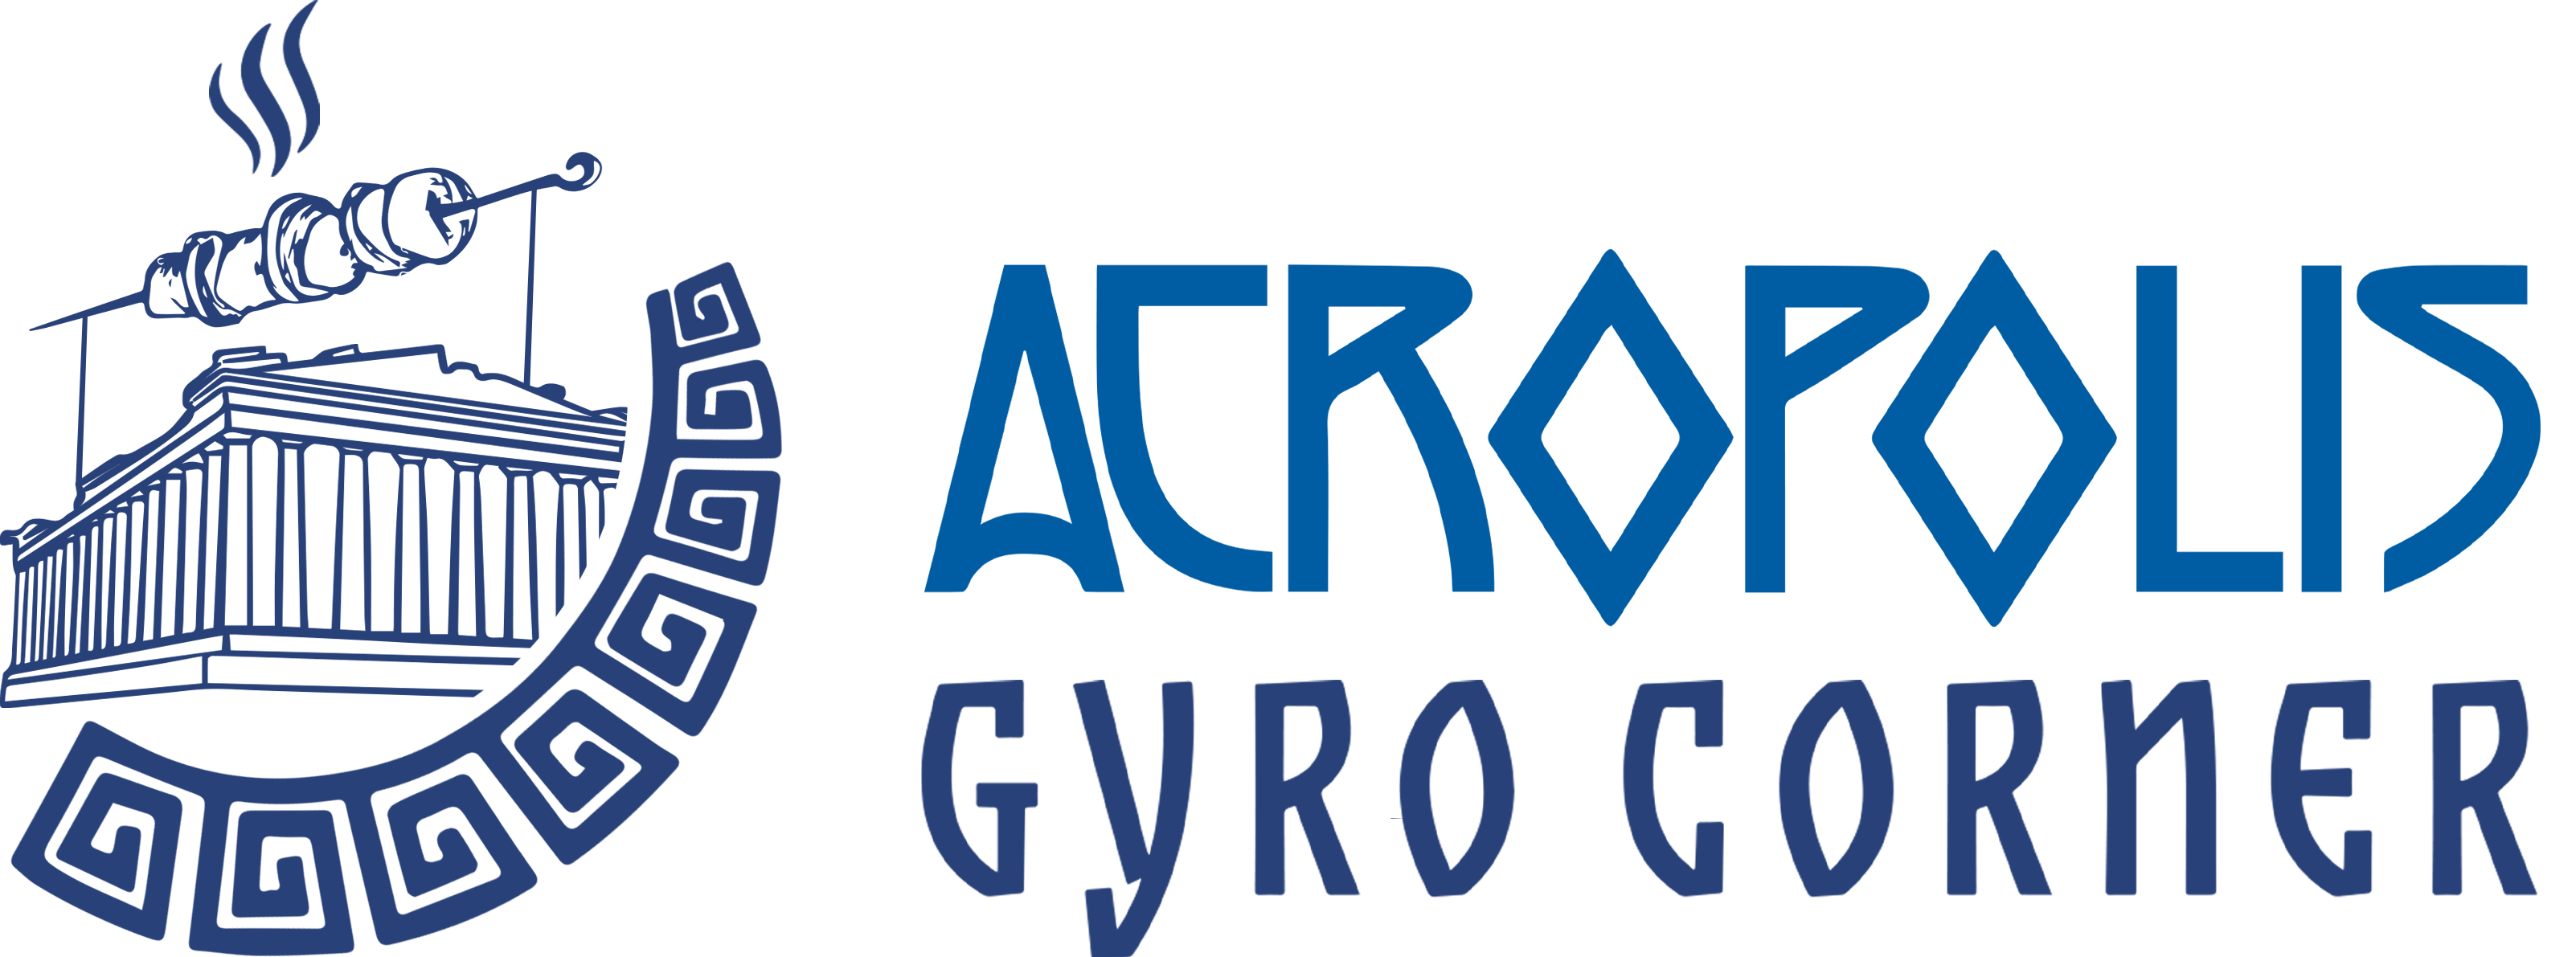 Acropolis Gyro Corner